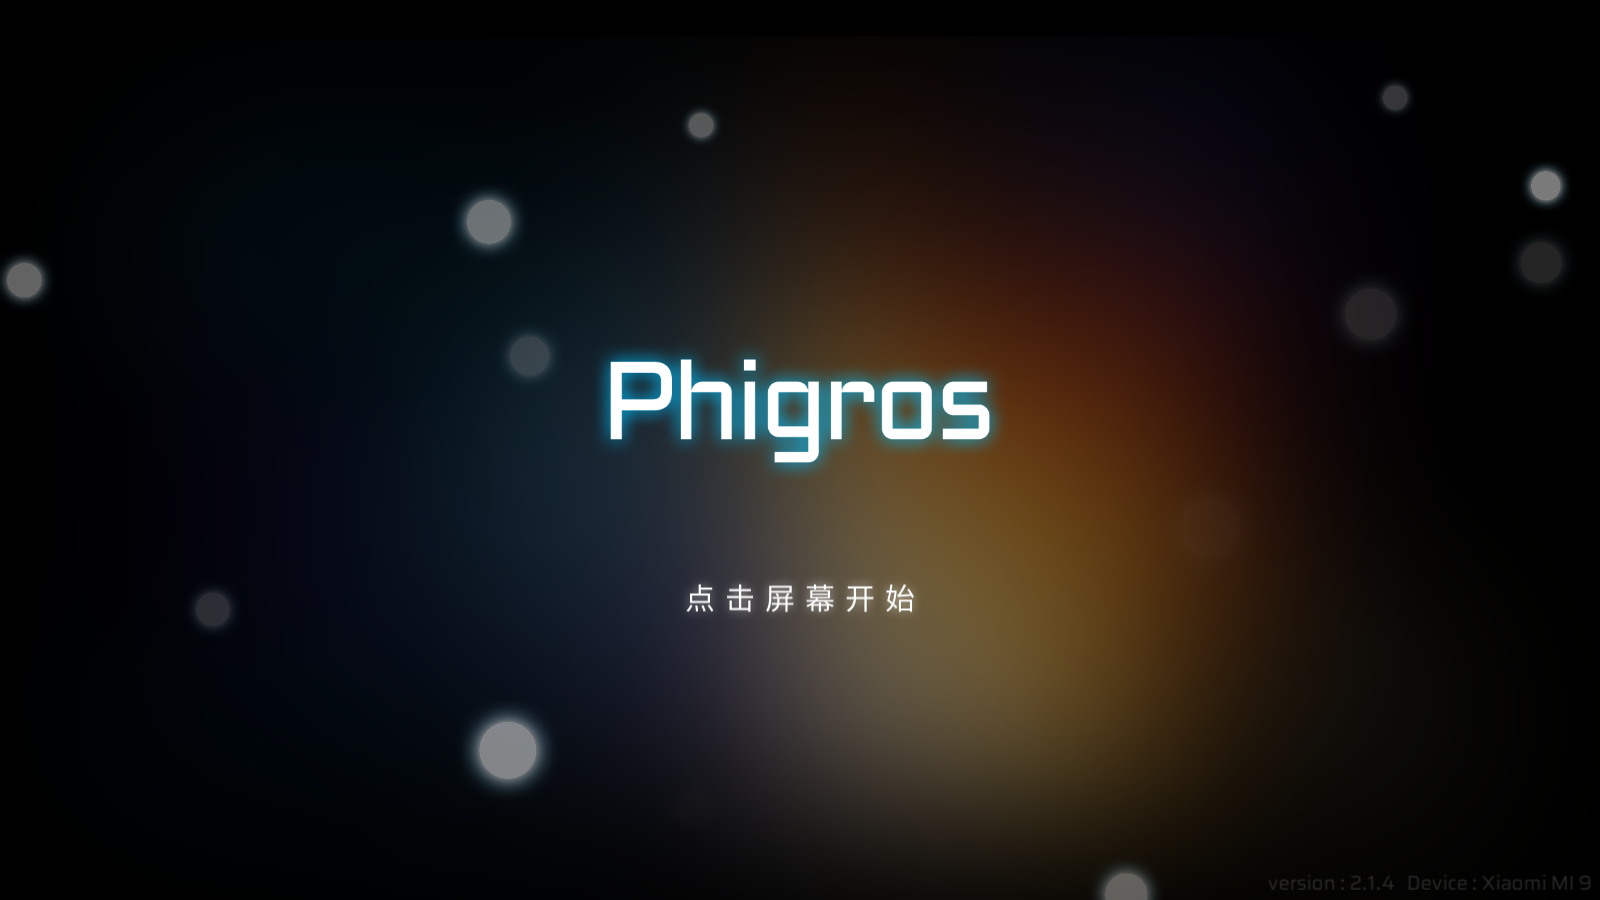 (菲格罗斯)Phigros(1)